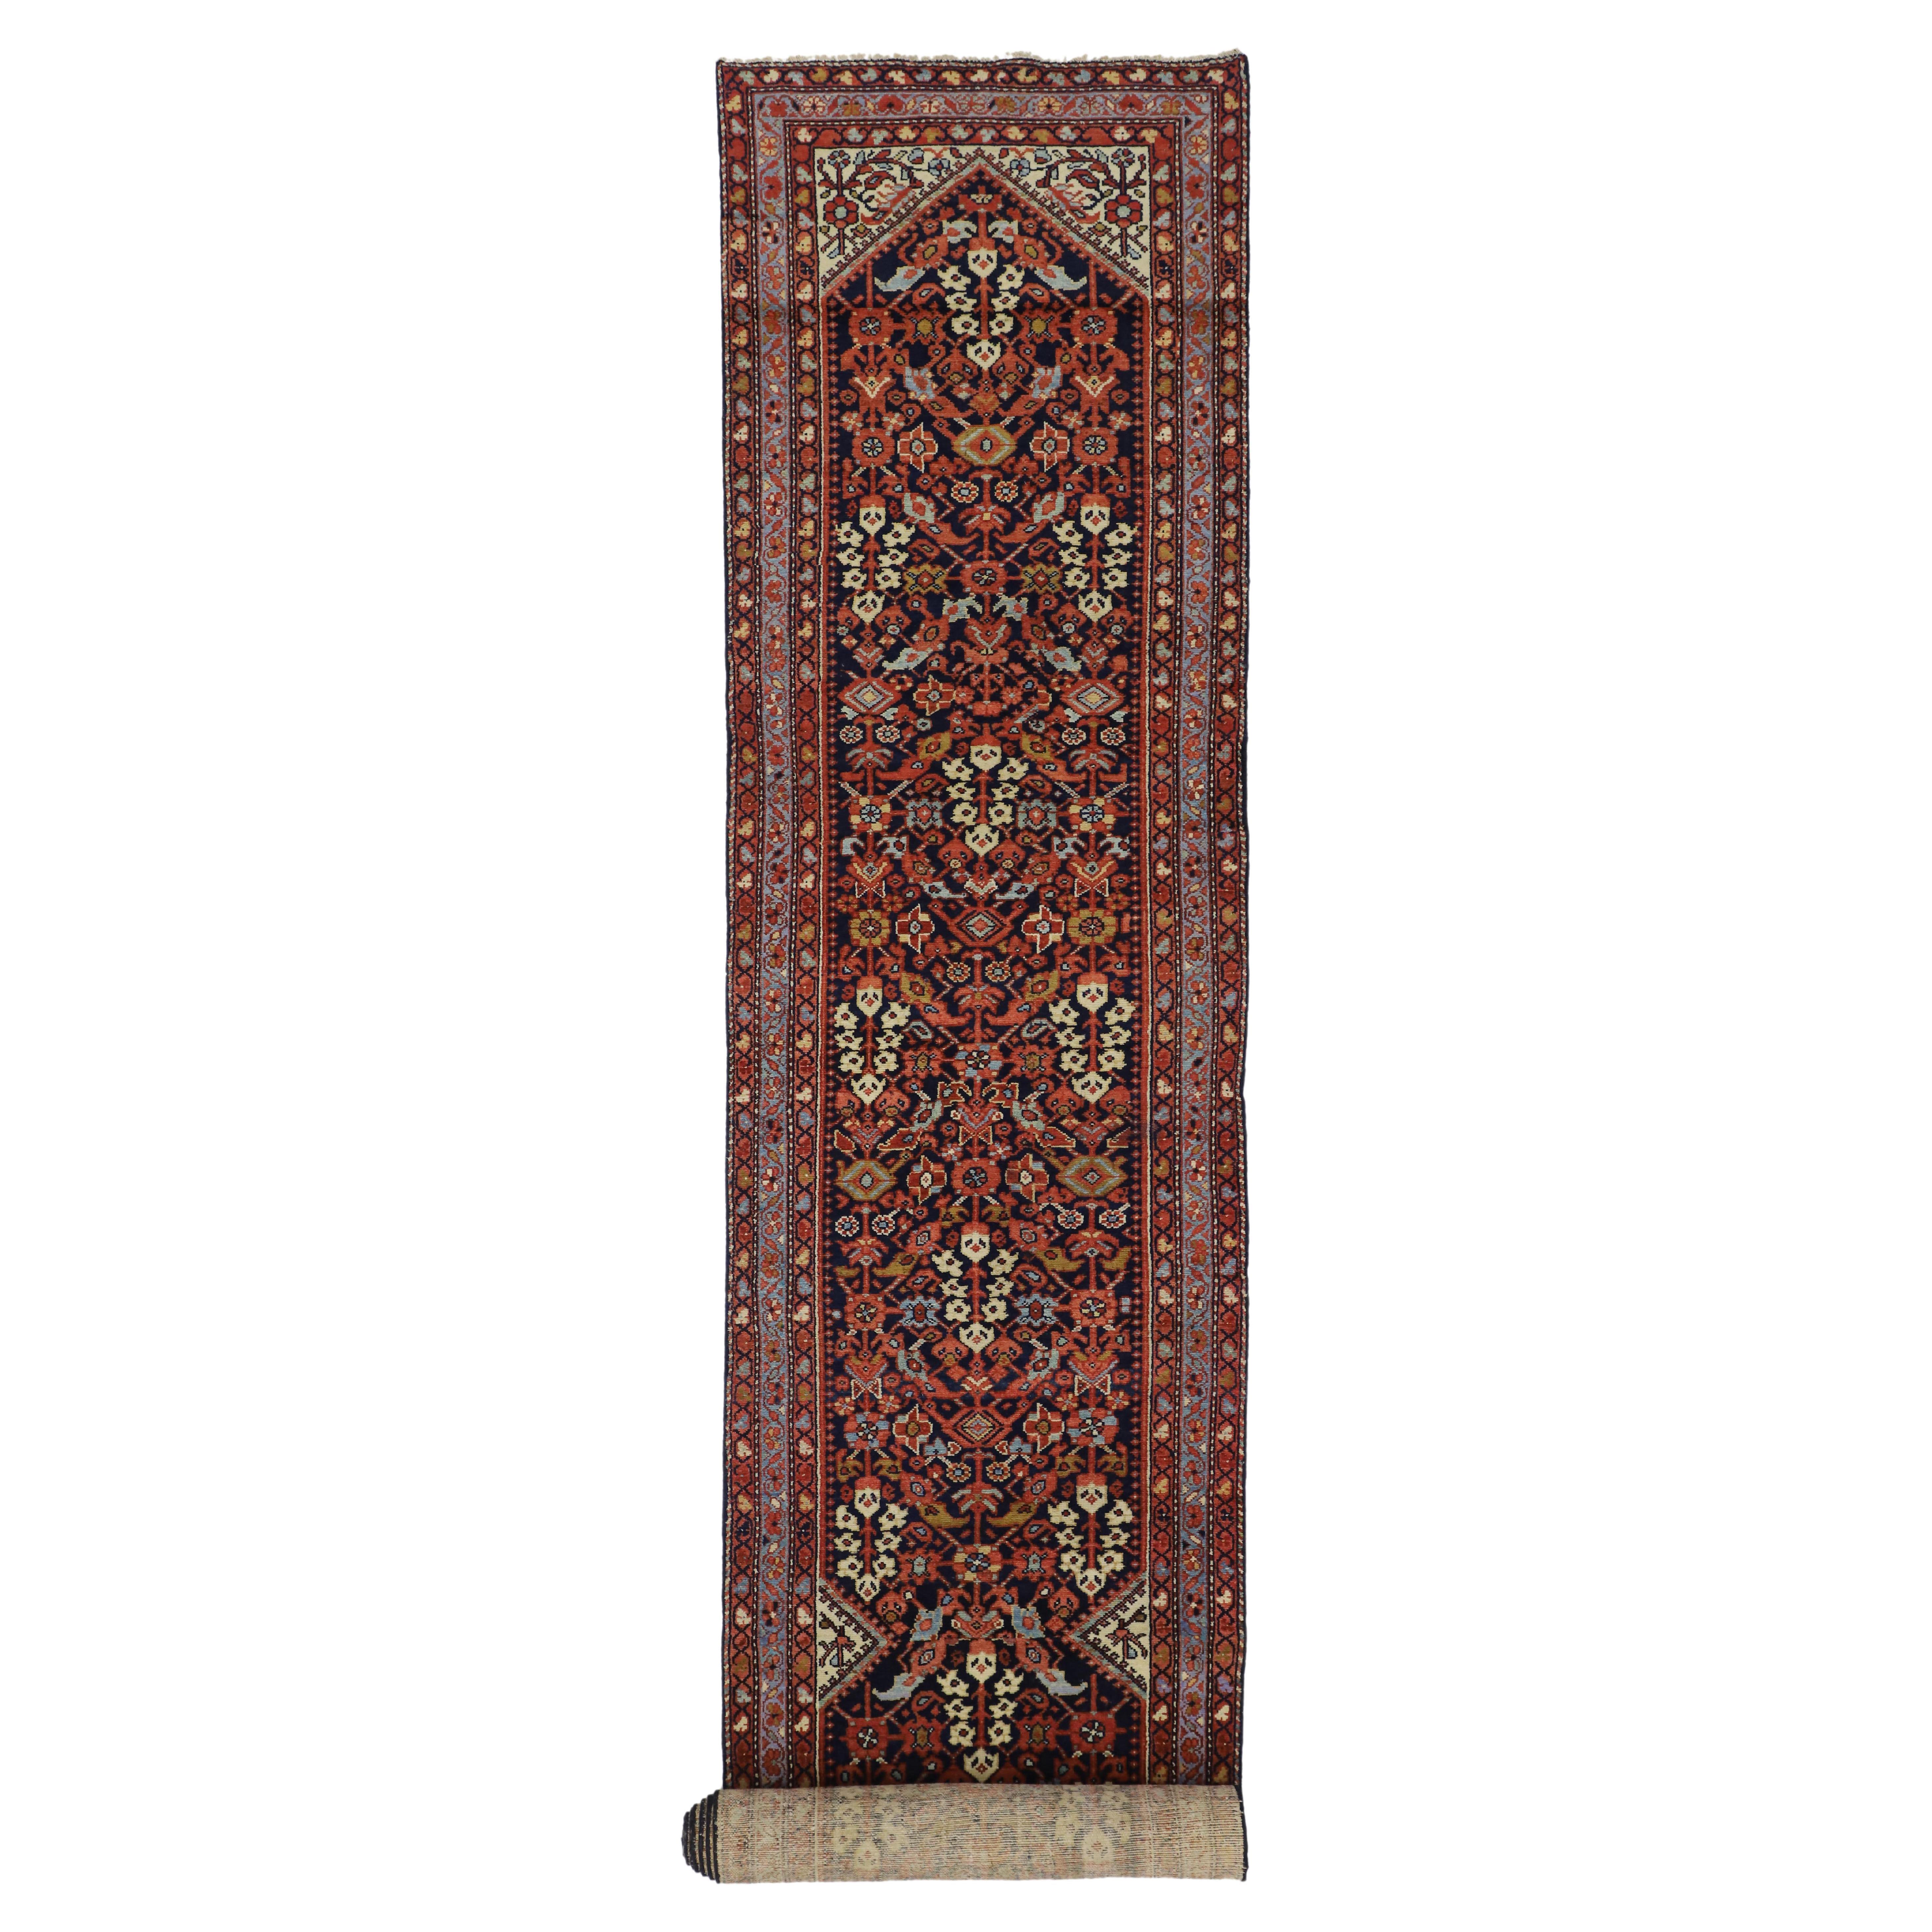 Tapis de couloir persan ancien Malayer avec fleur de Hinnai Guli, long tapis de couloir